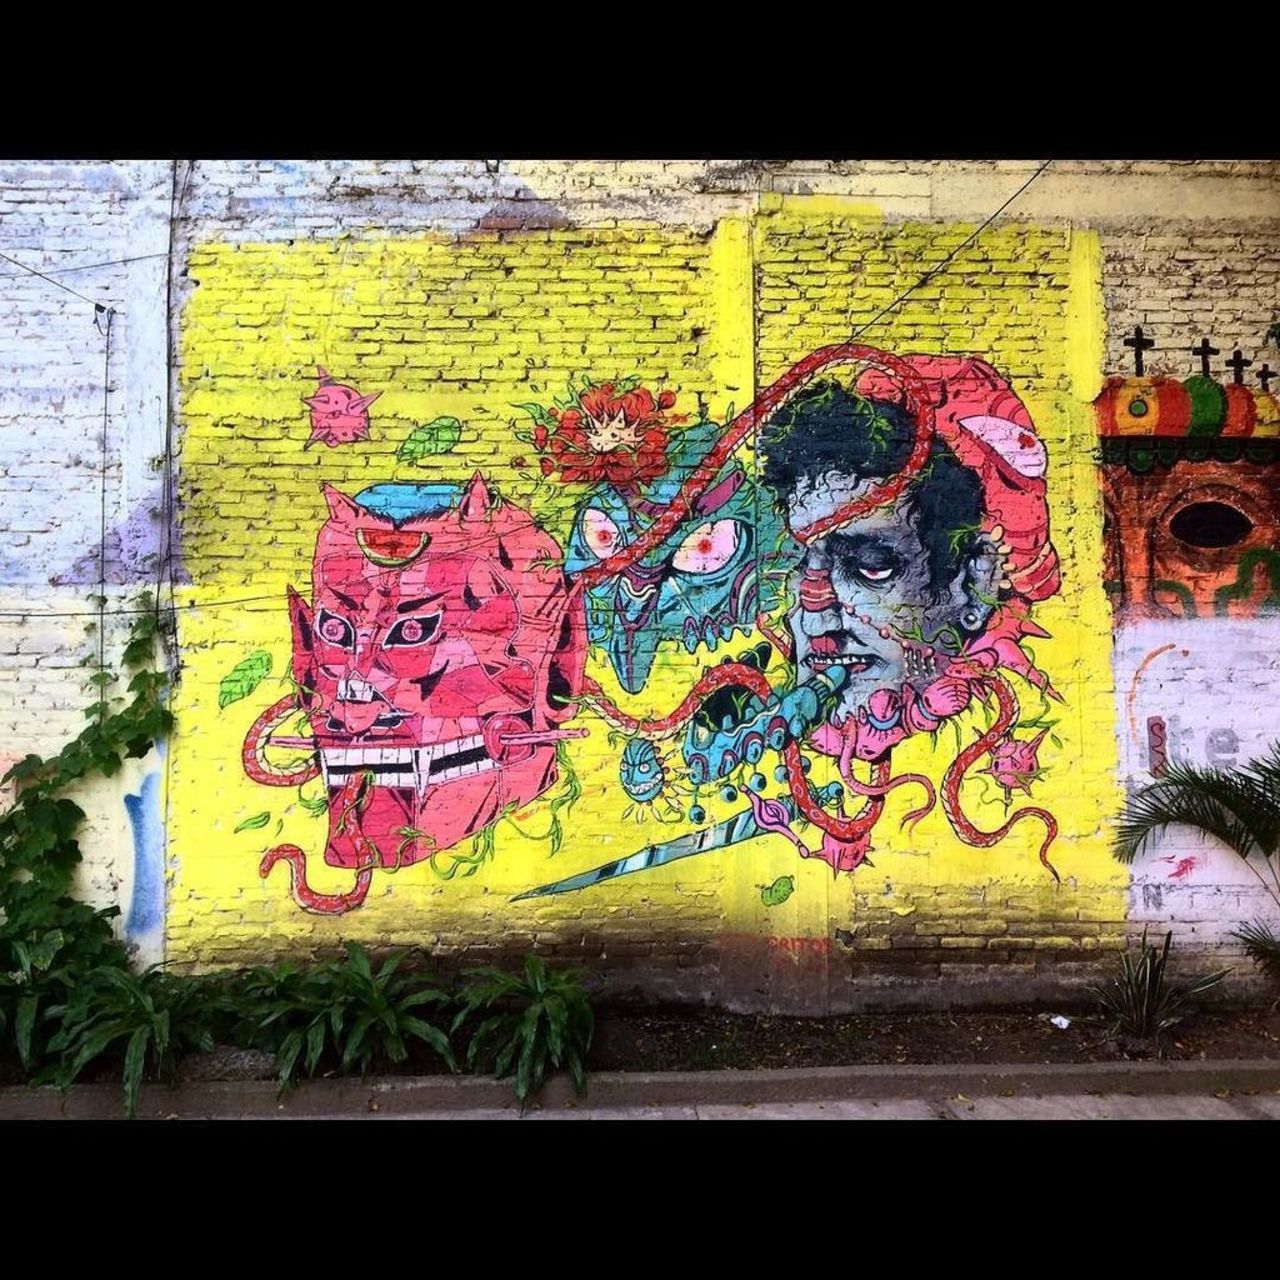 #streetart #streetartmexico #colors #wallporn #streetphotography #graffiti #art #México #mexicocity #df by nachonal… https://t.co/1DexBhrk8k